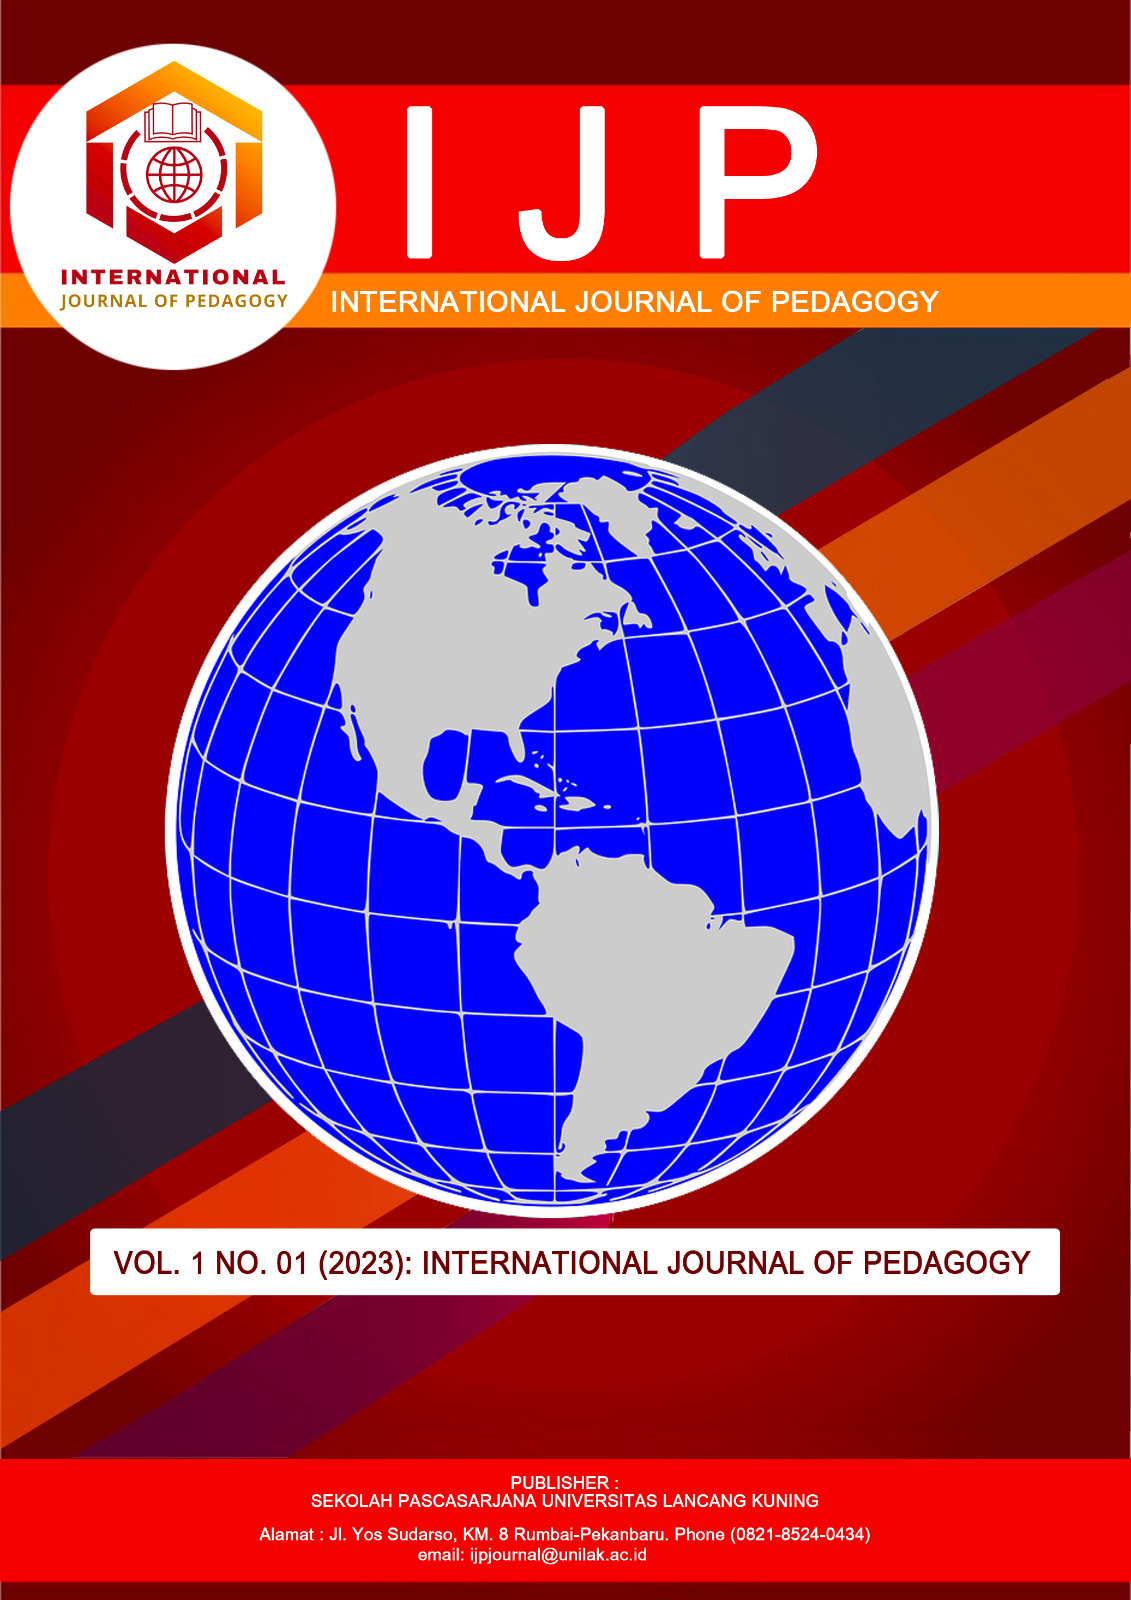 International Journal of Pedagogy Volume 1 Number 1, April 2023